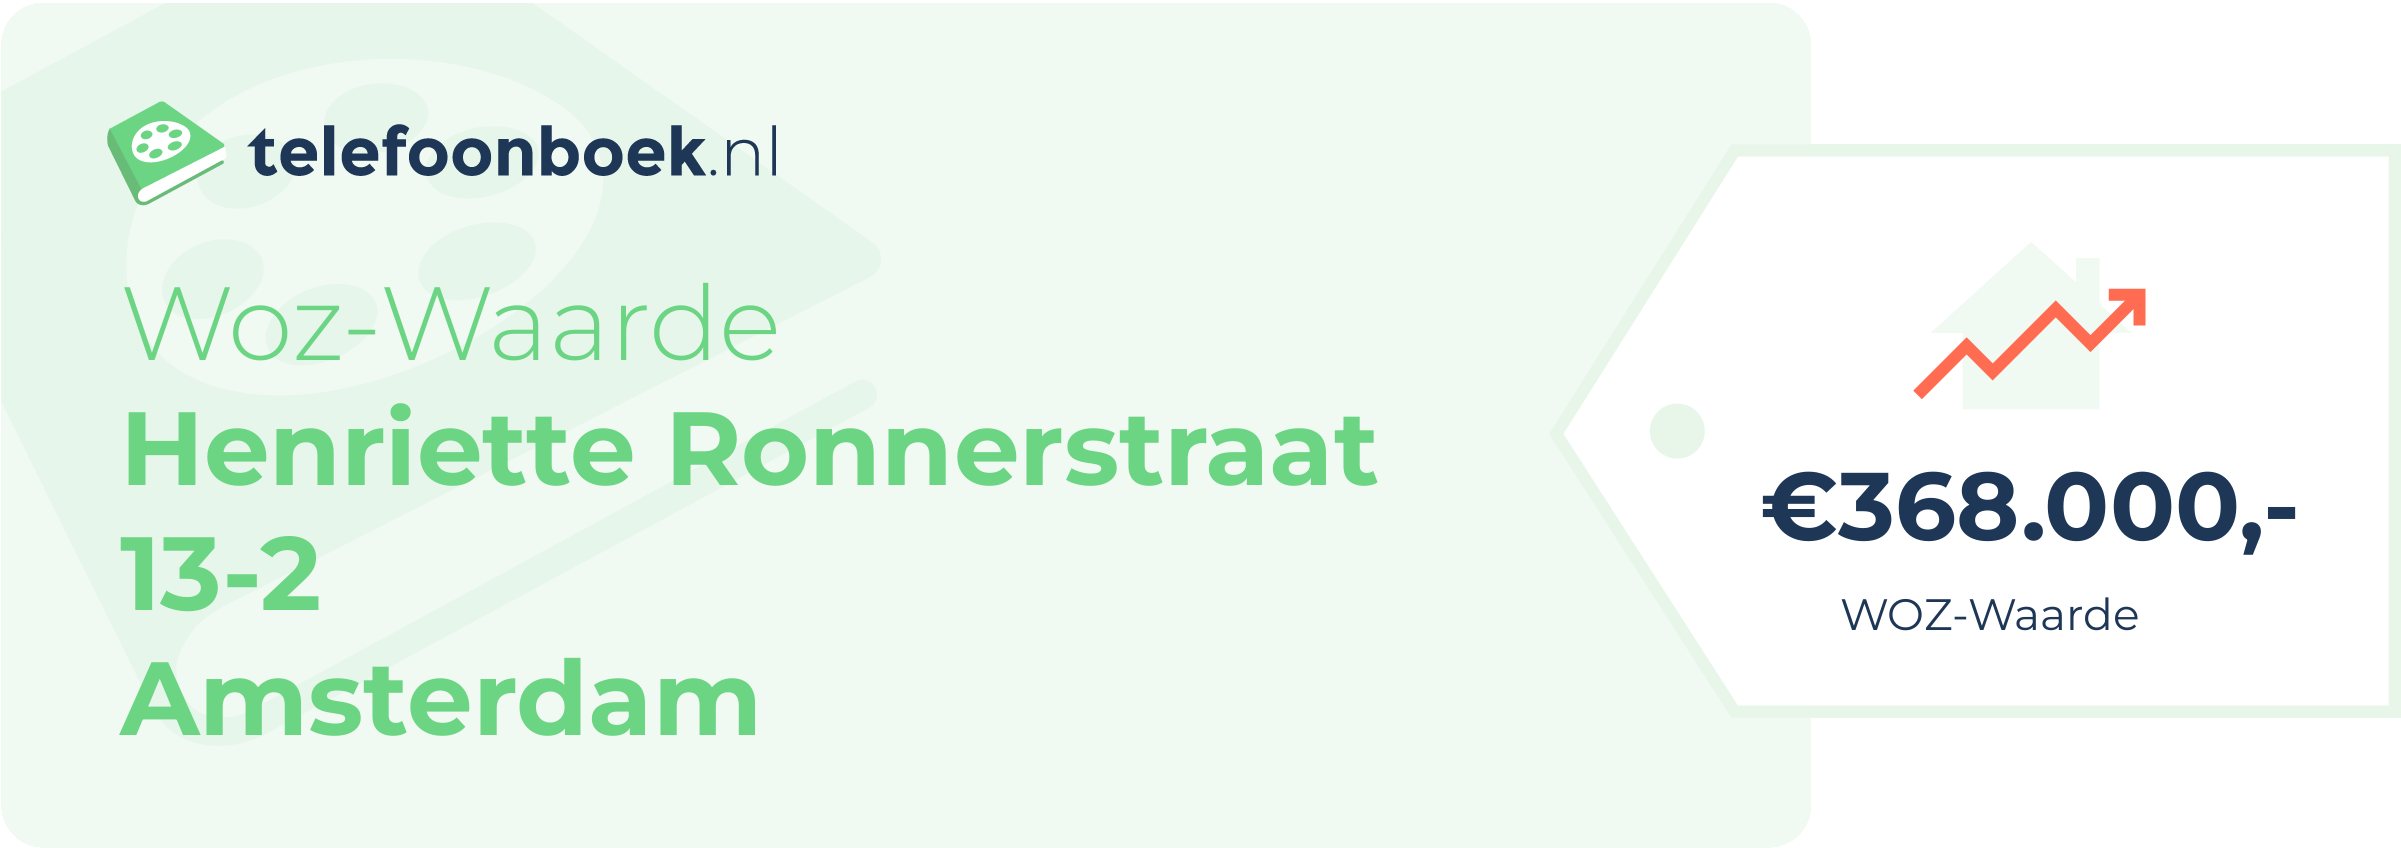 WOZ-waarde Henriette Ronnerstraat 13-2 Amsterdam